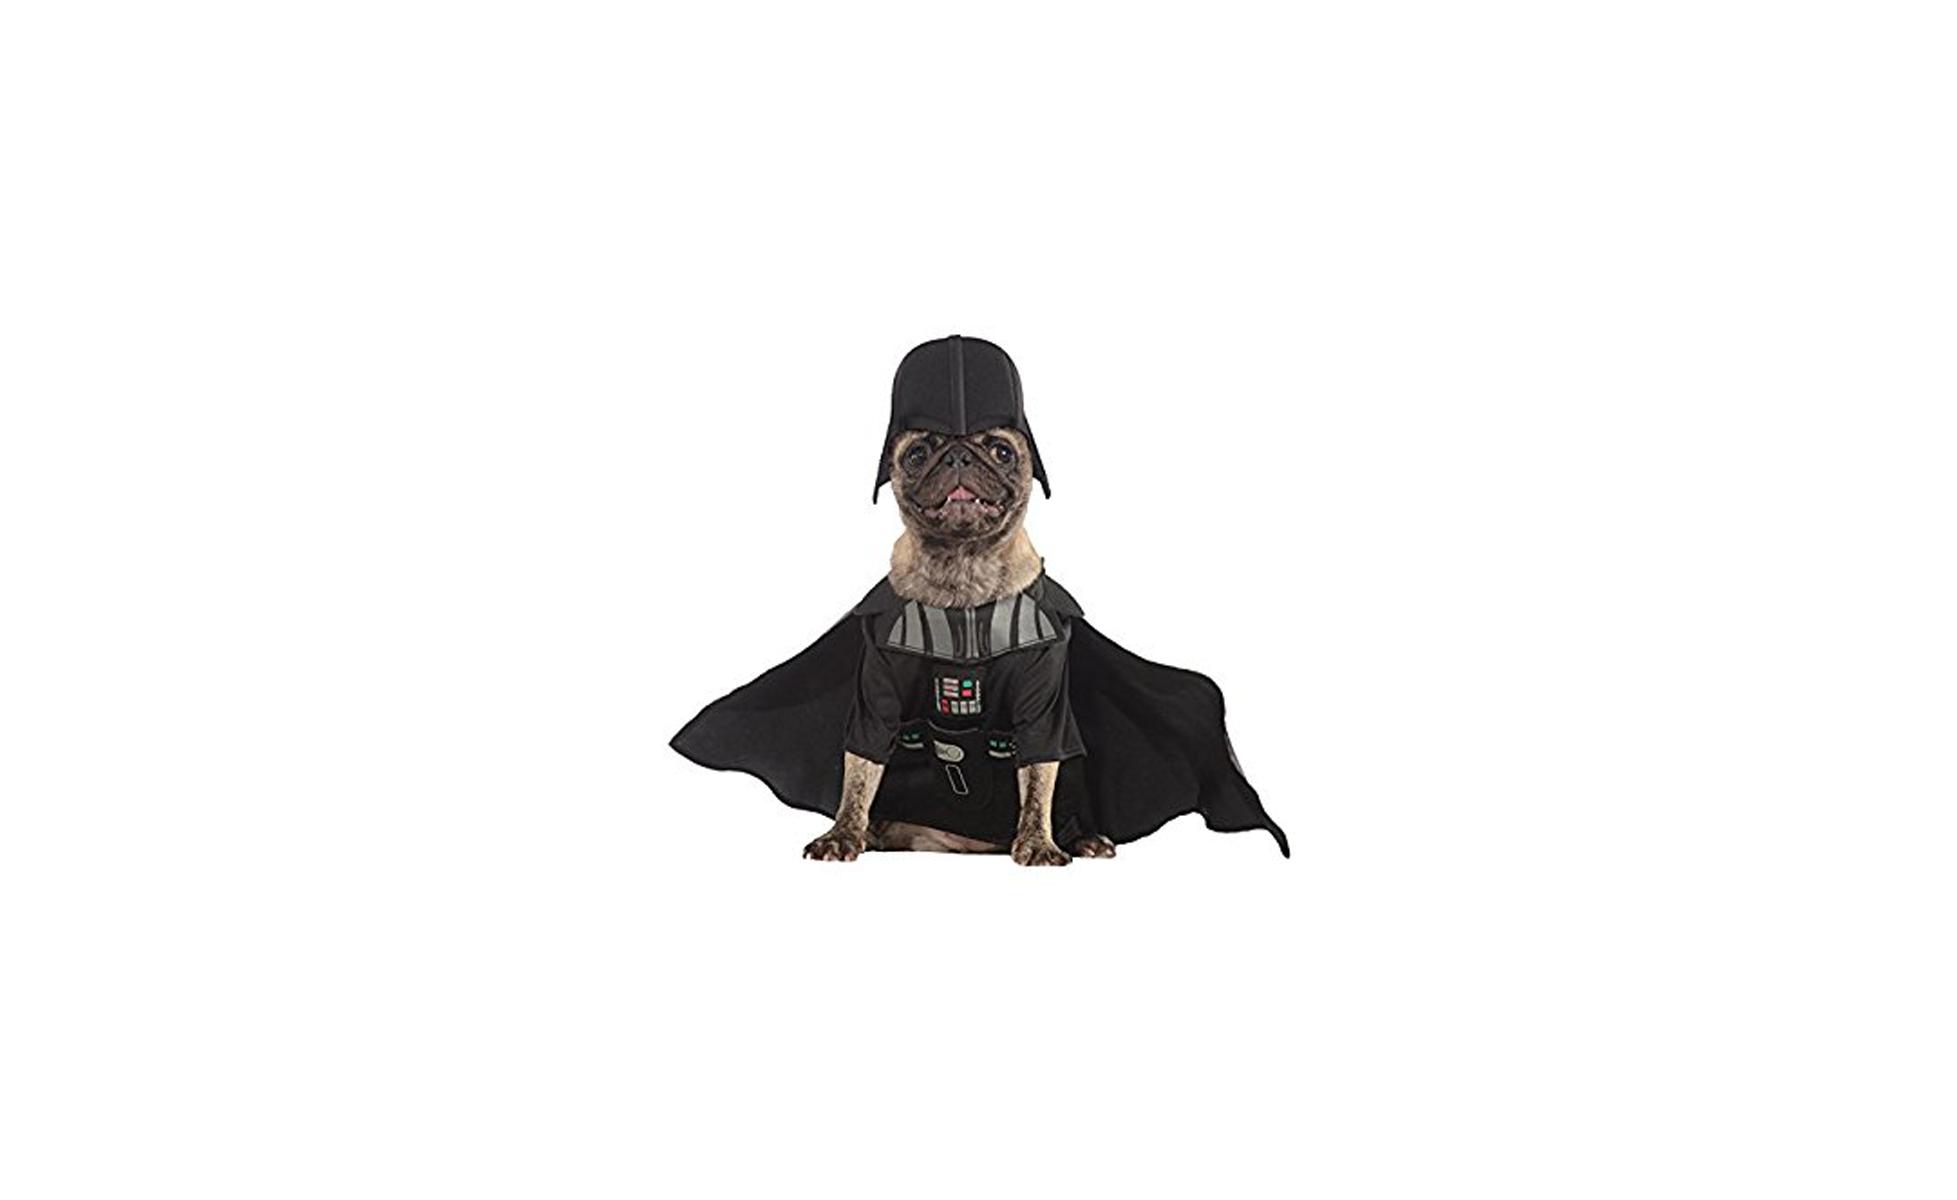   Darth Vader Dog Costume at Wayfair  